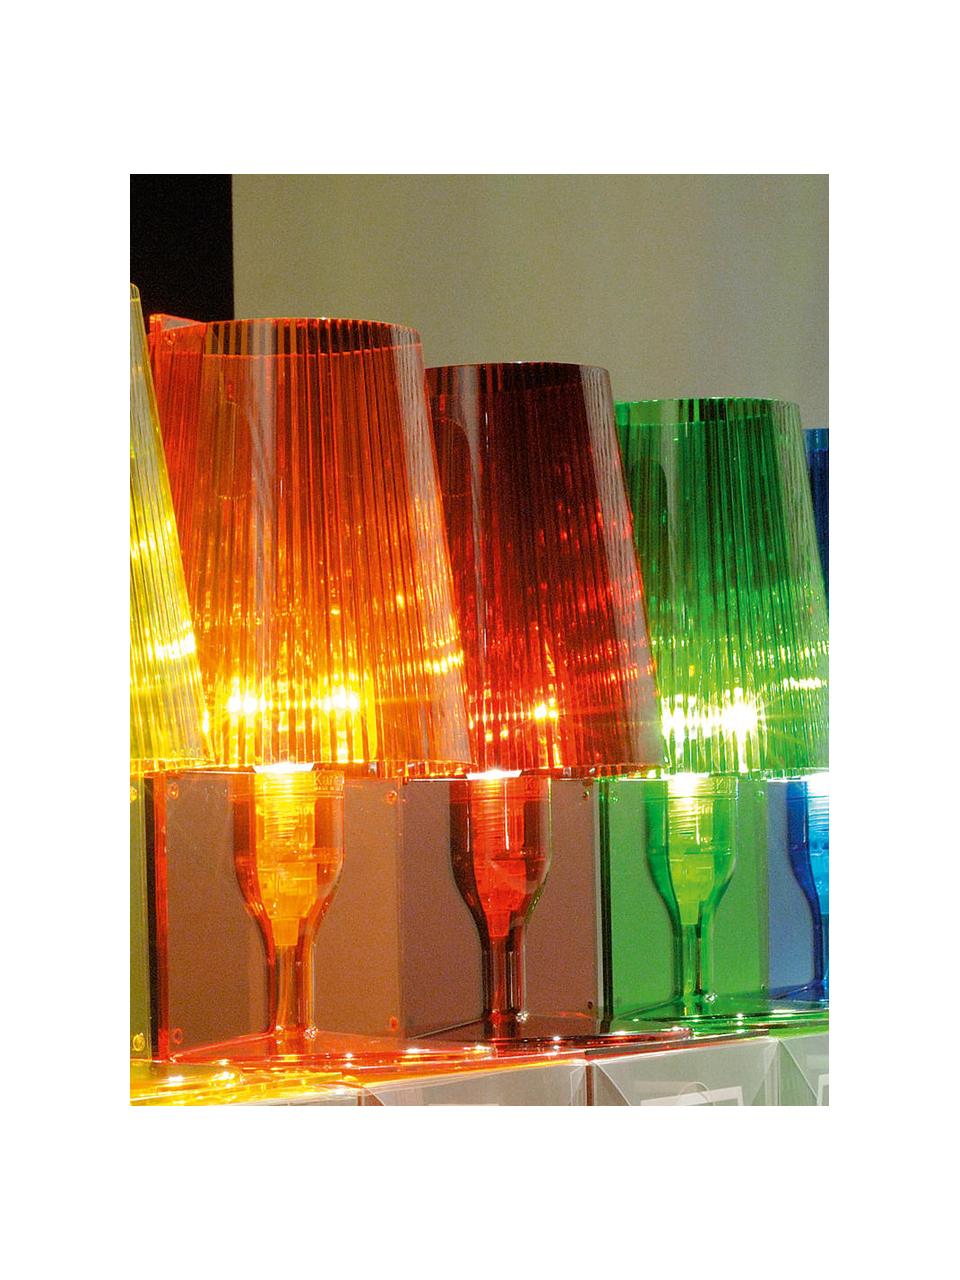 Lampada da tavolo LED Take, Lampada: plastica, Terracotta, trasparente, Larg. 19 x Alt. 31 cm